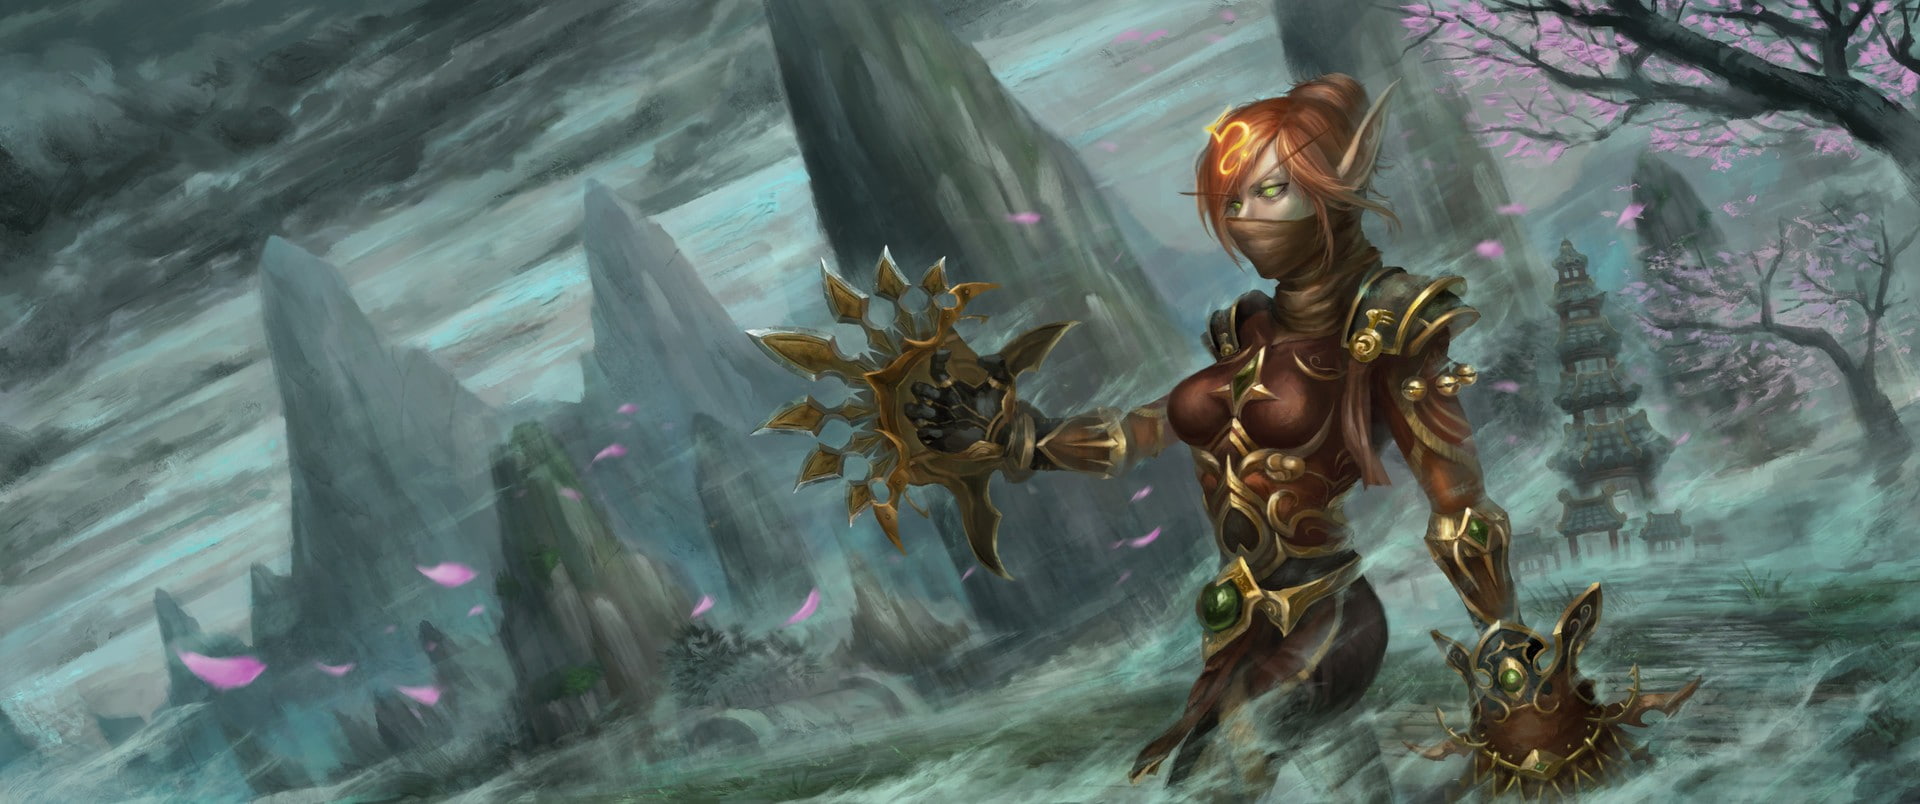 fantasy art, Blood Elf, World of Warcraft: Mists of Pandaria